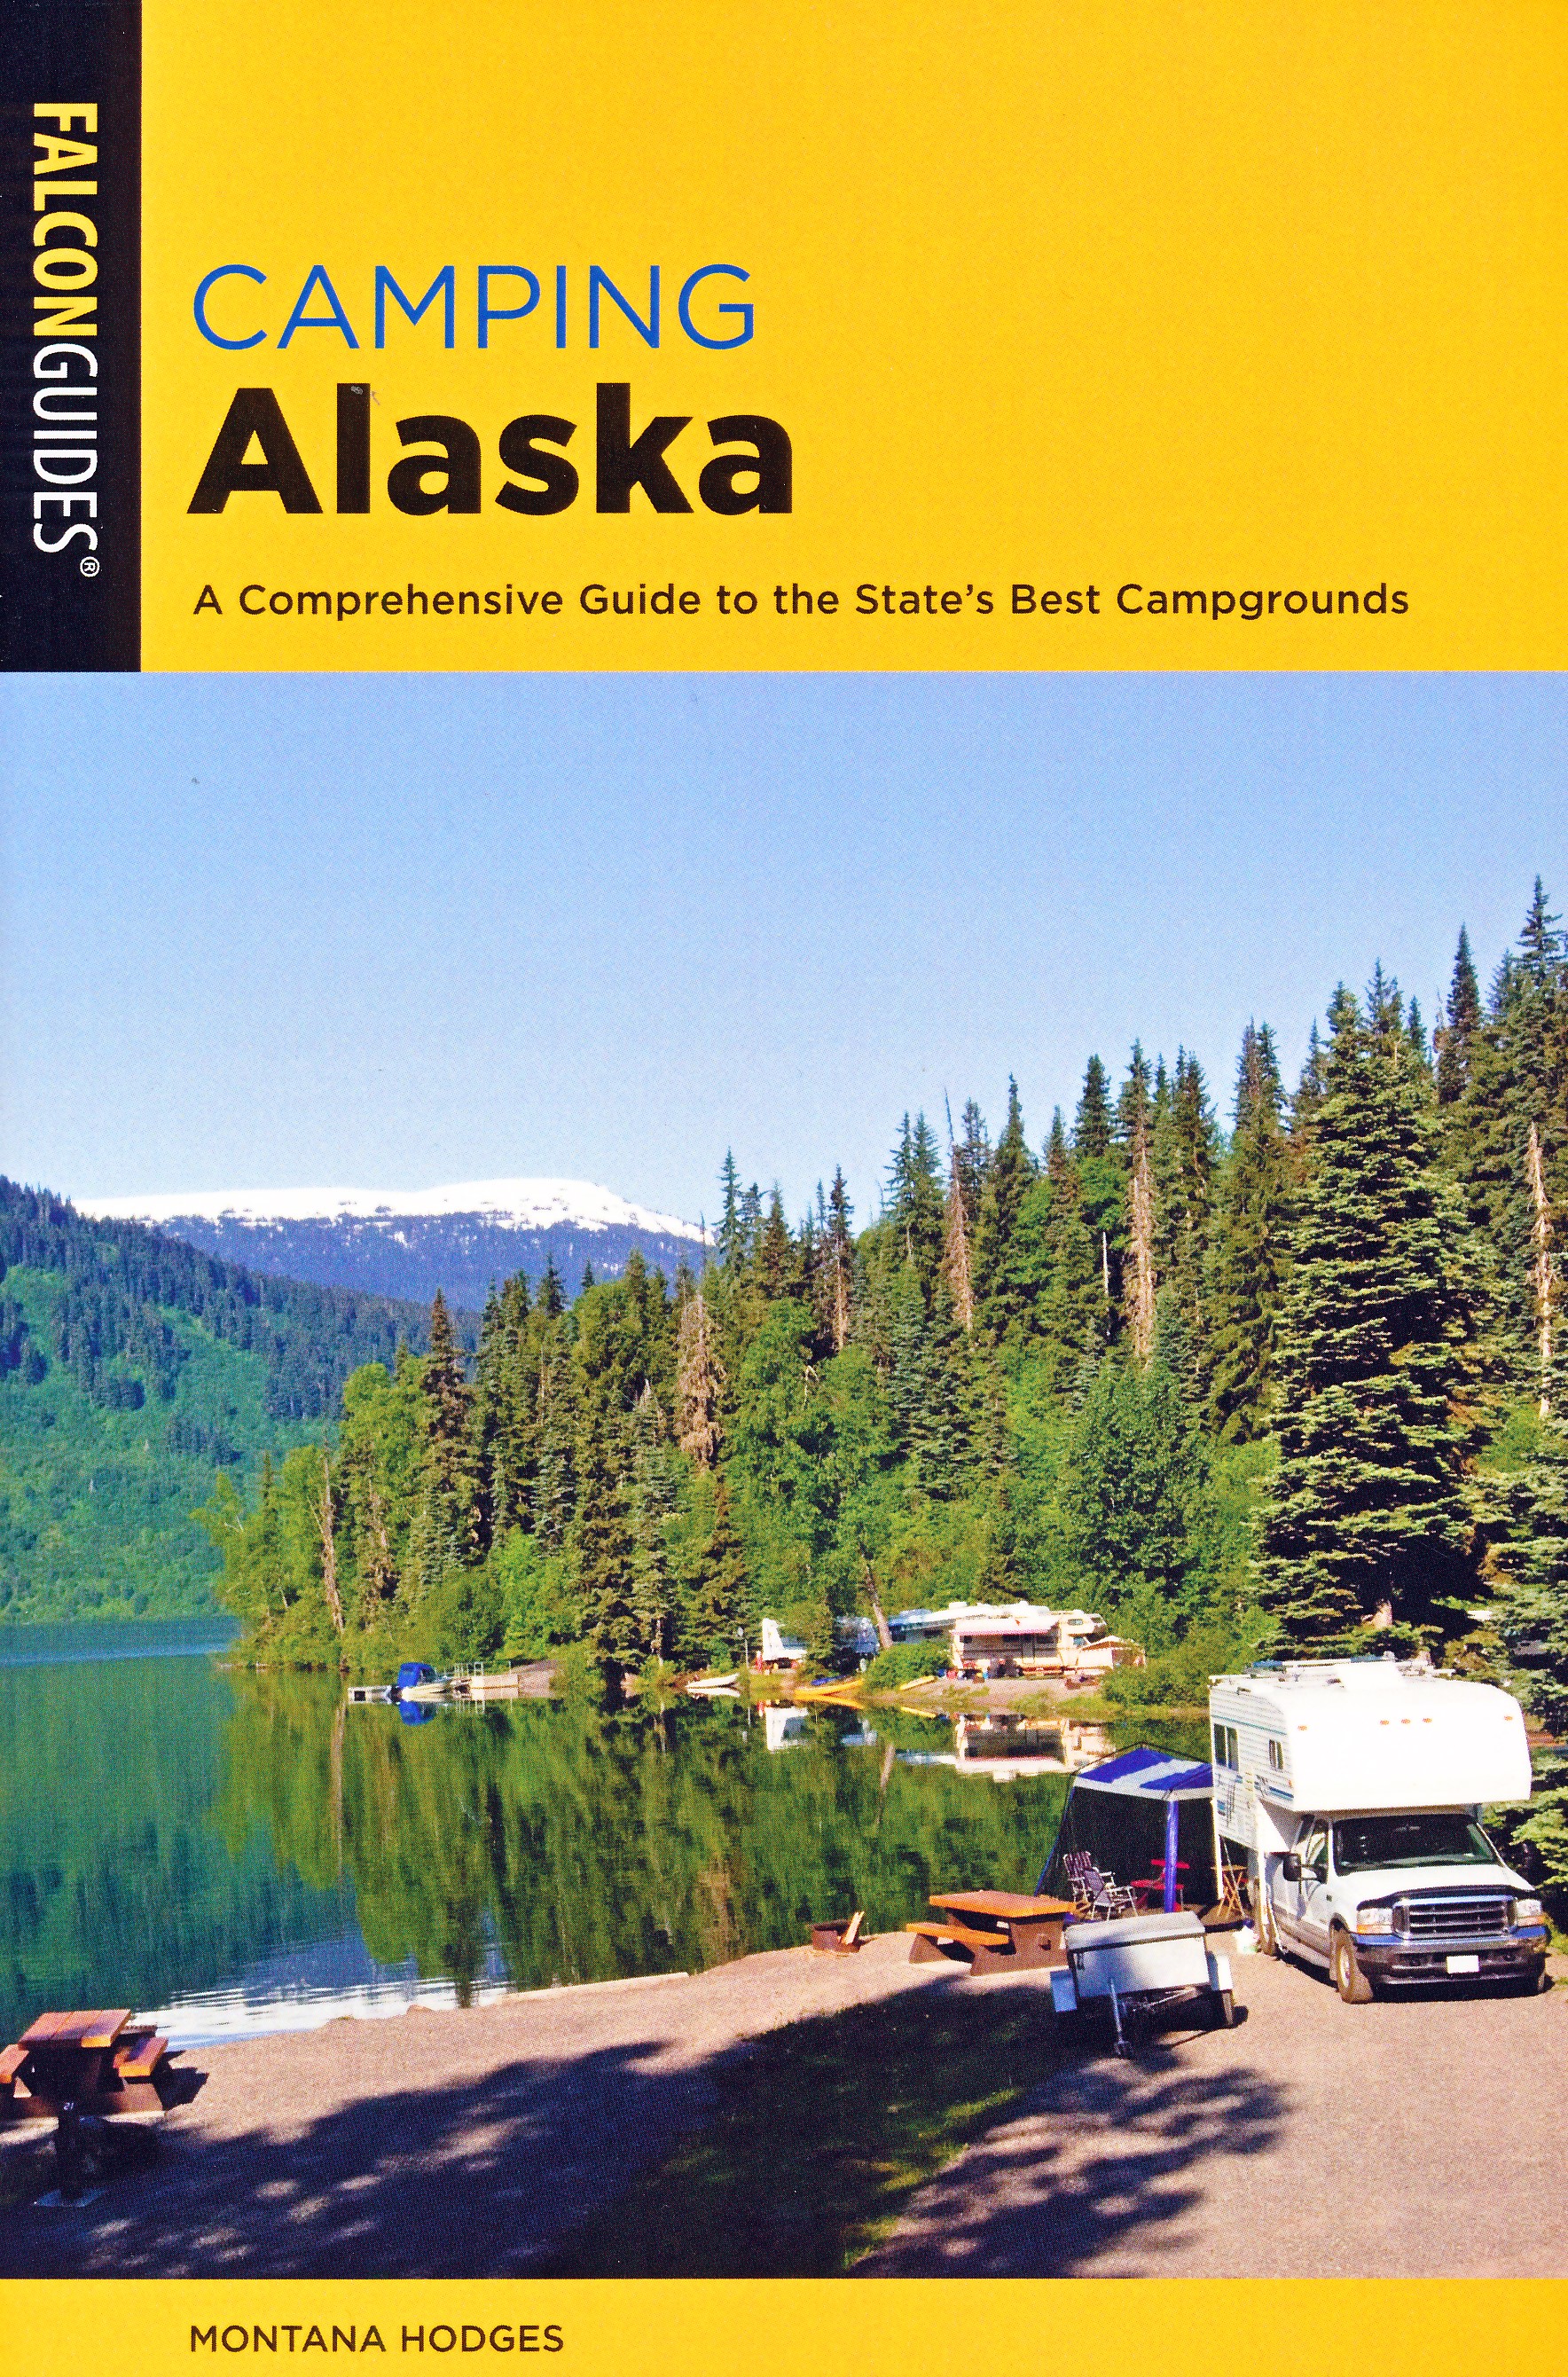 Online bestellen: Campergids - Campinggids Camping Alaska | Falcon press